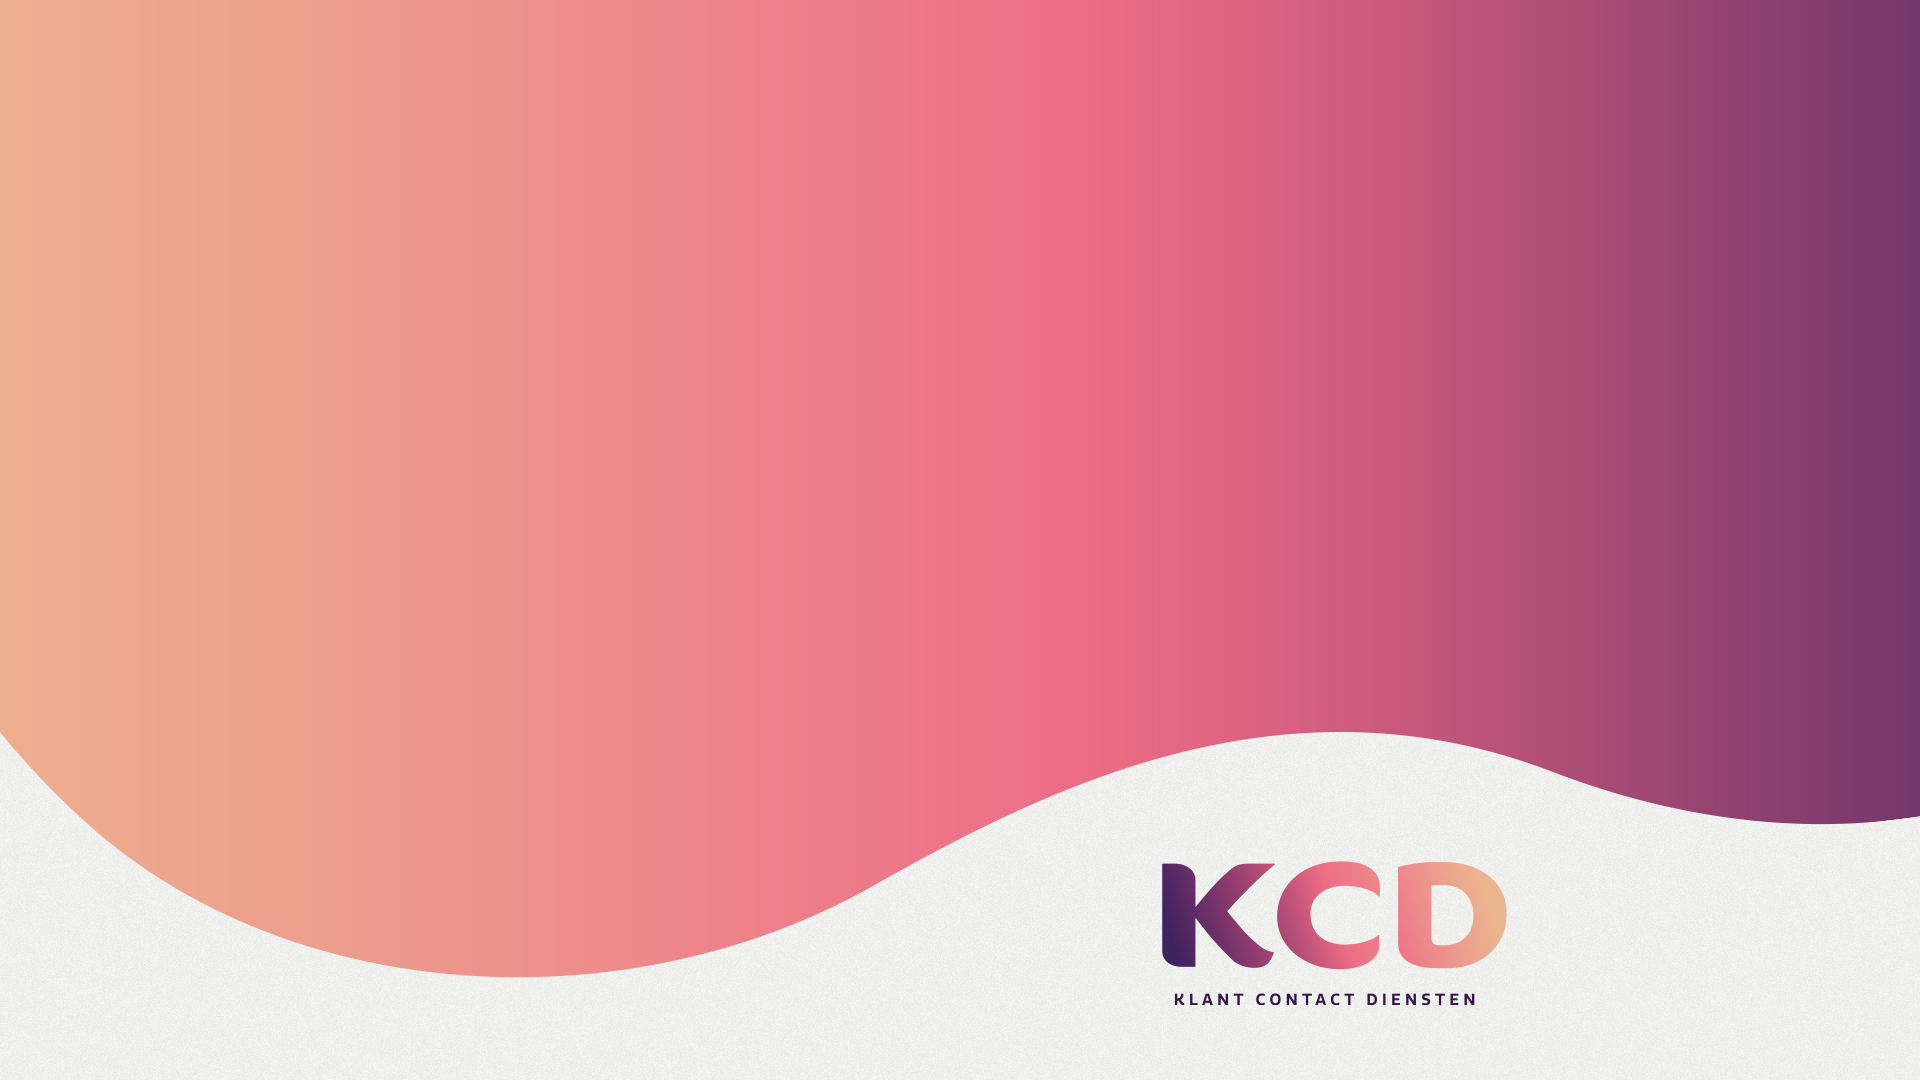 Logo KCD